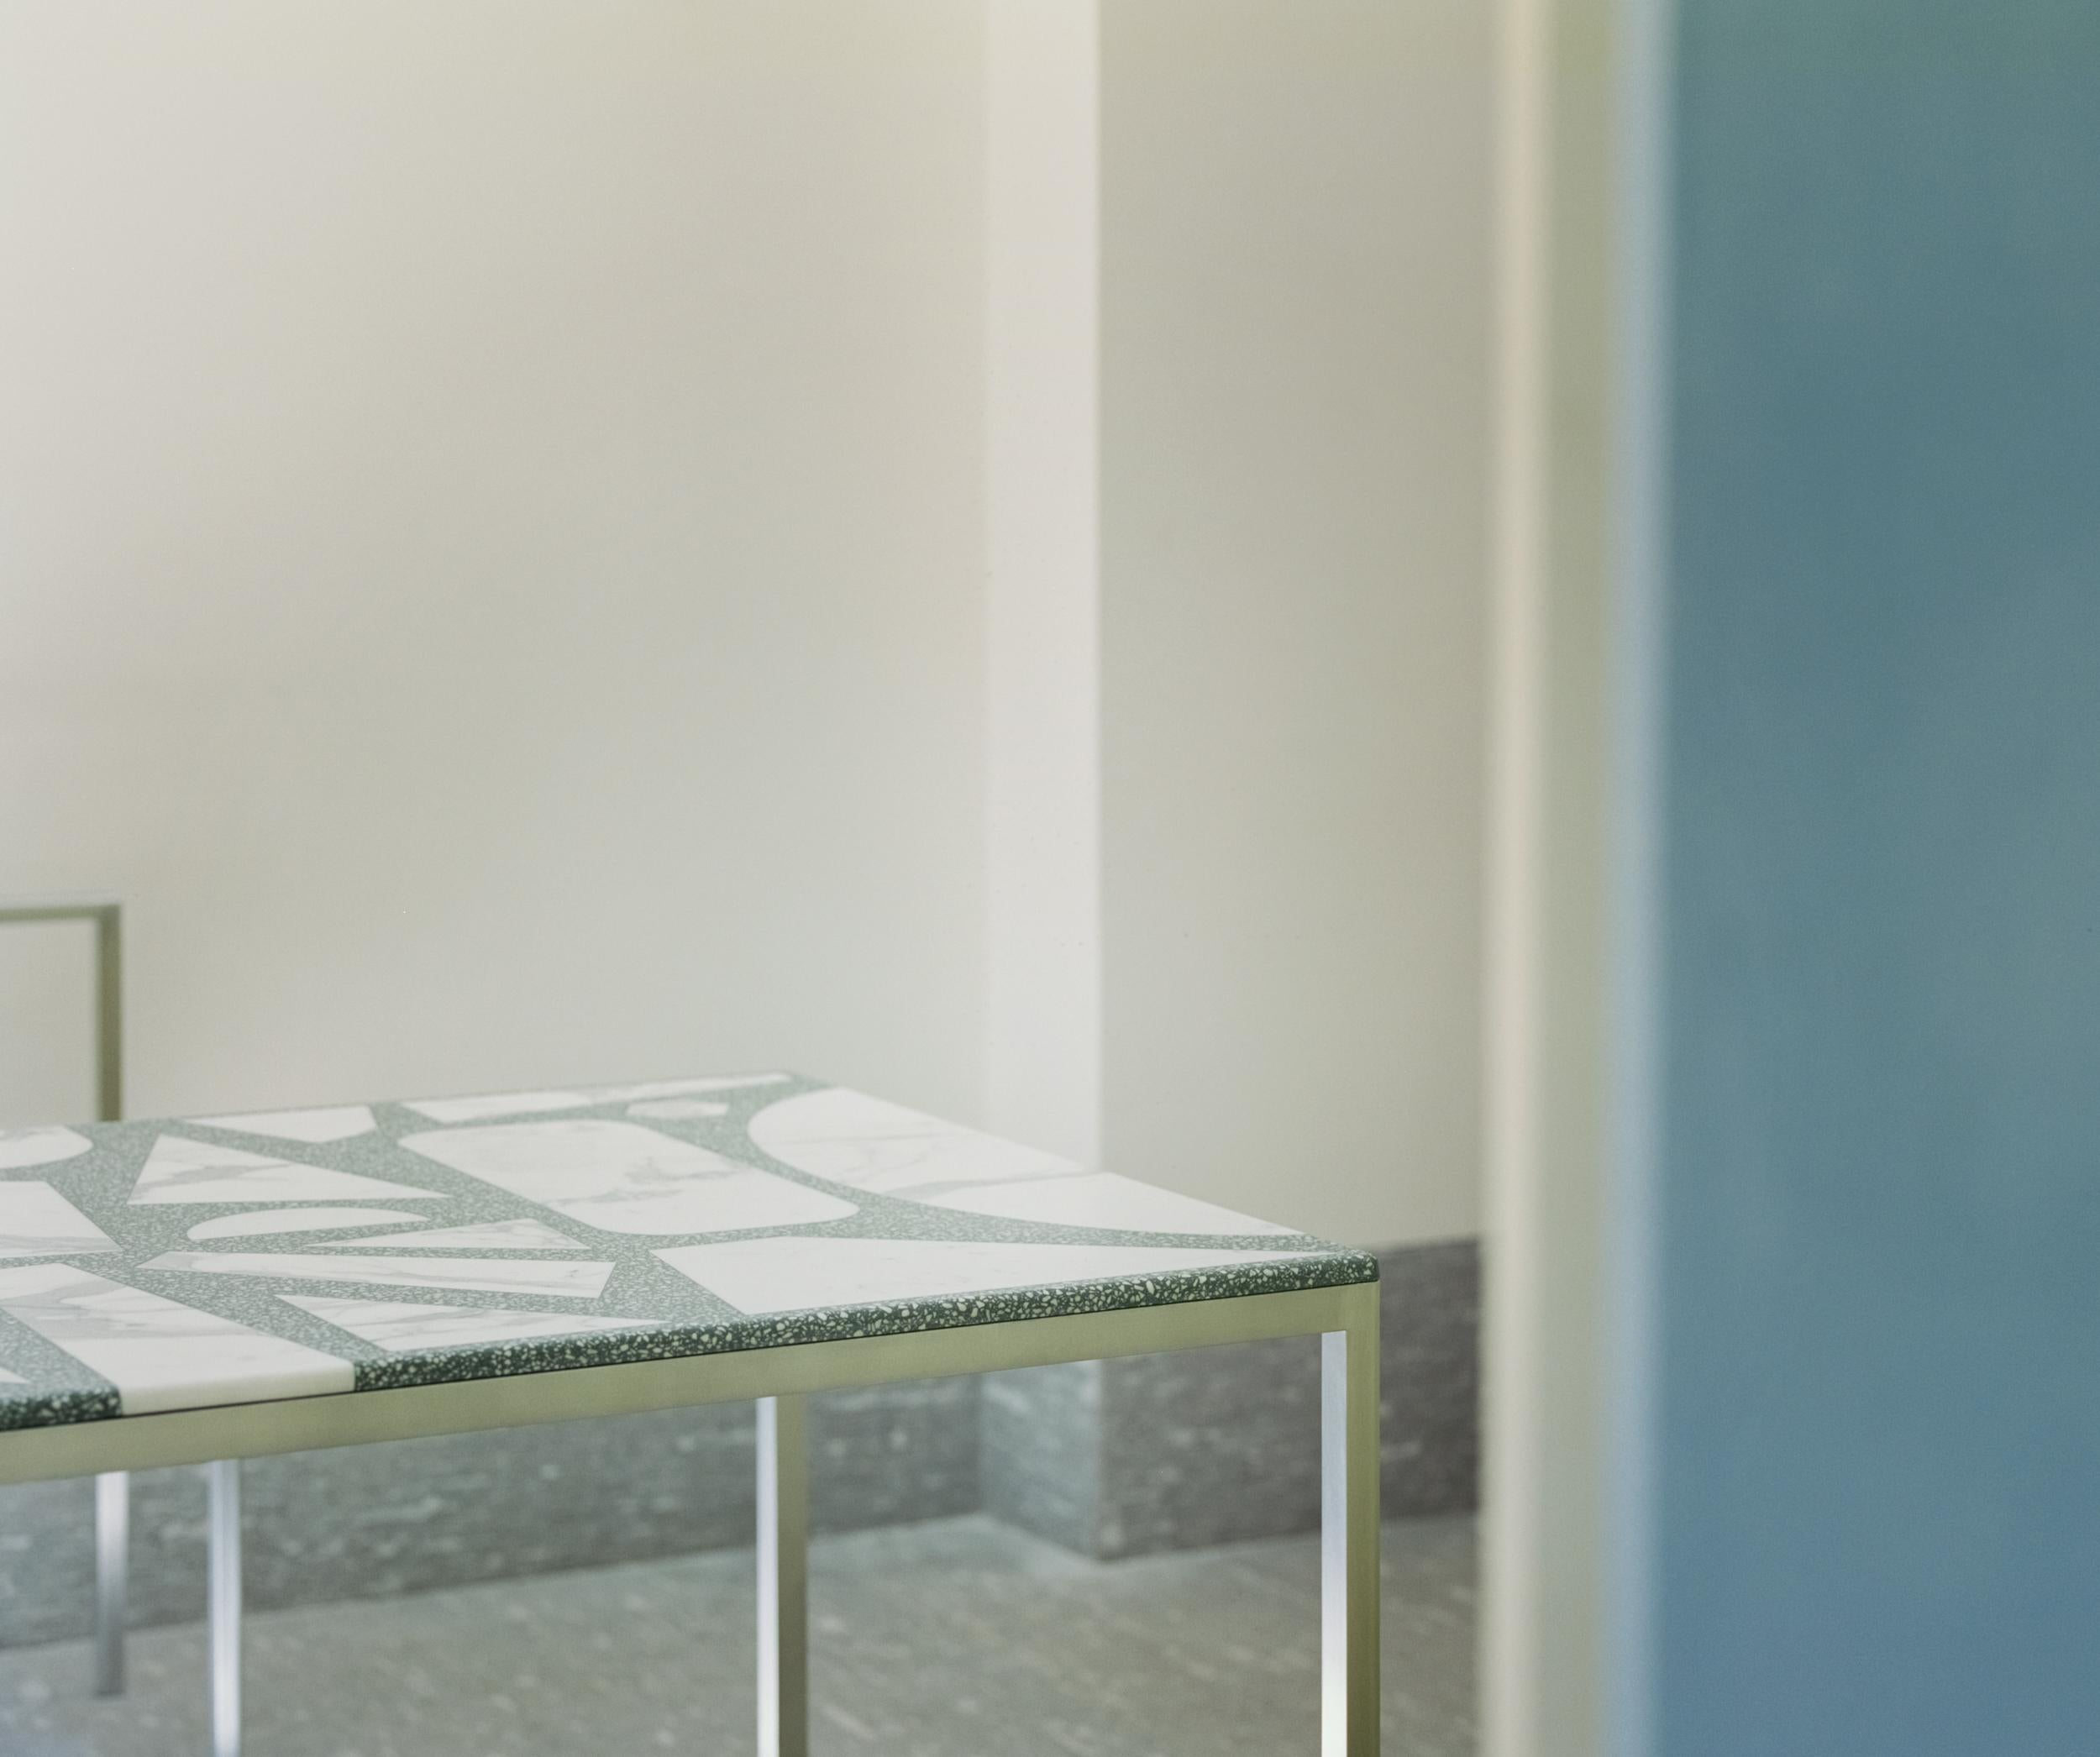 Terrazzo dining table by Stefan Scholten.
Dimensions: L 240 x W 90 x H 73 cm.
Materials: Aluminium, Statuario.

Stefan Scholten is a Dutch designer born in 1972. After graduating from the Design Academy Eindhoven he set up Copray & Scholten